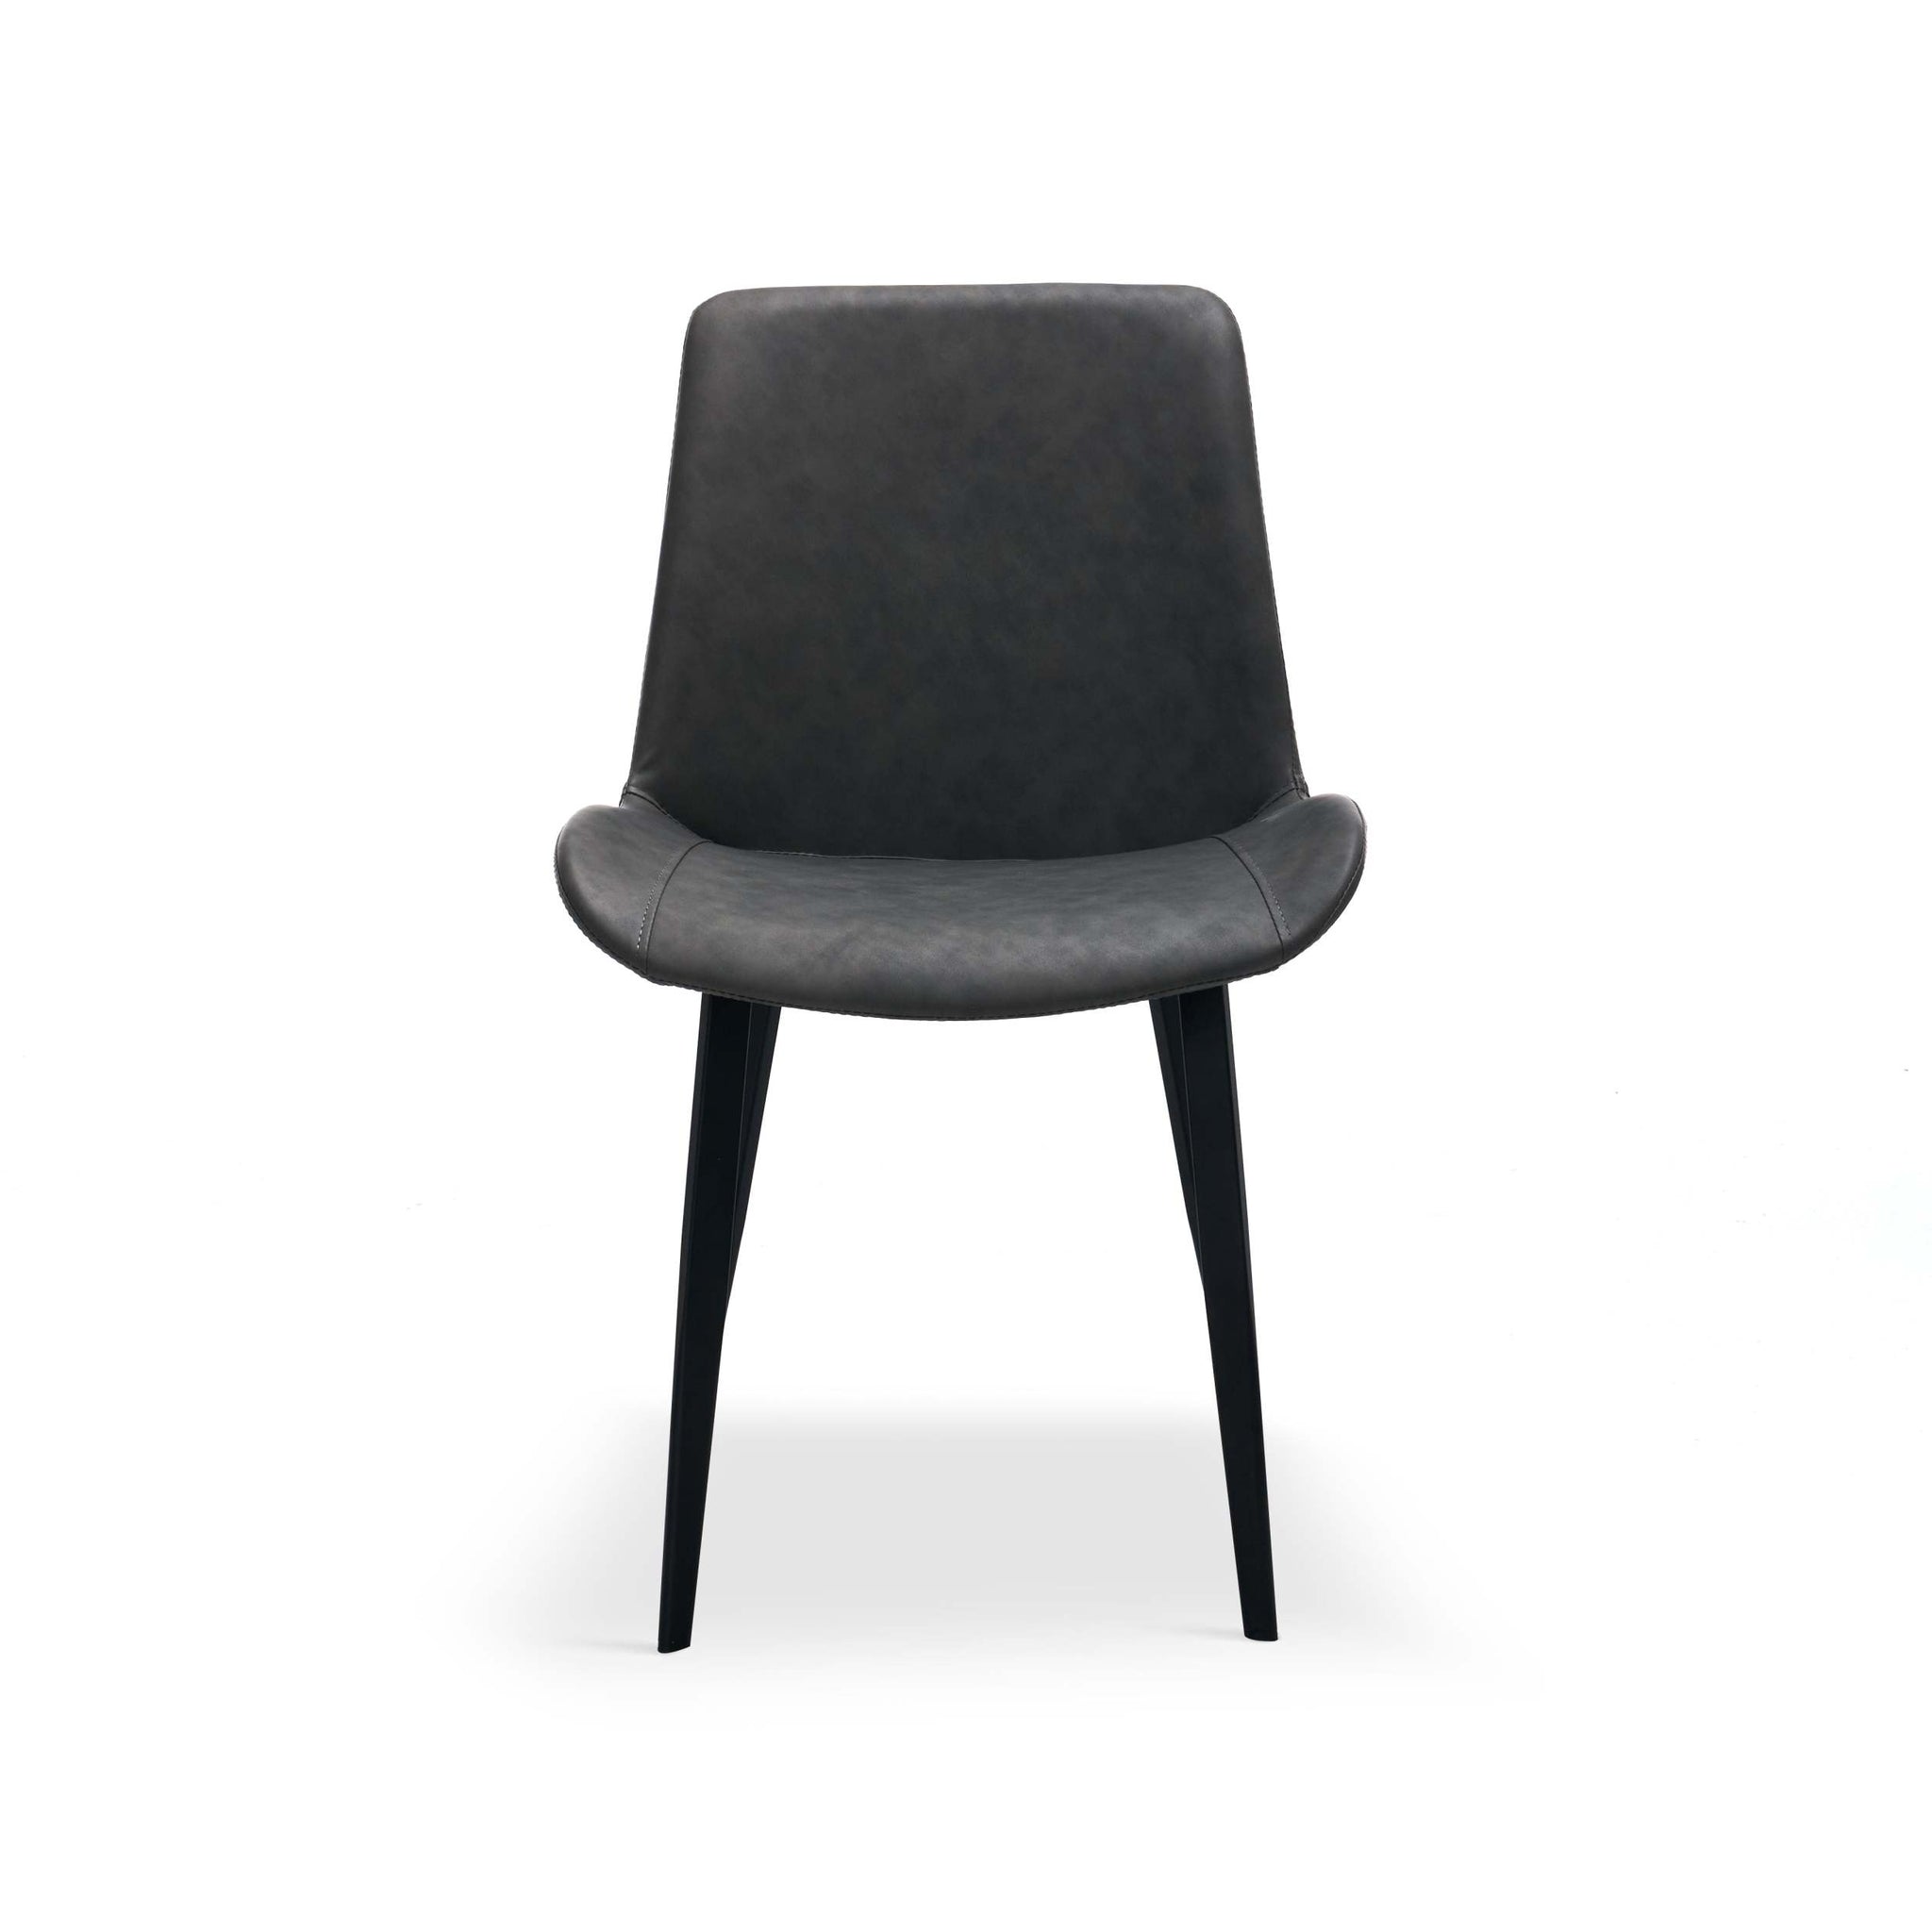 Dark gray microfiber leather dining chair, high